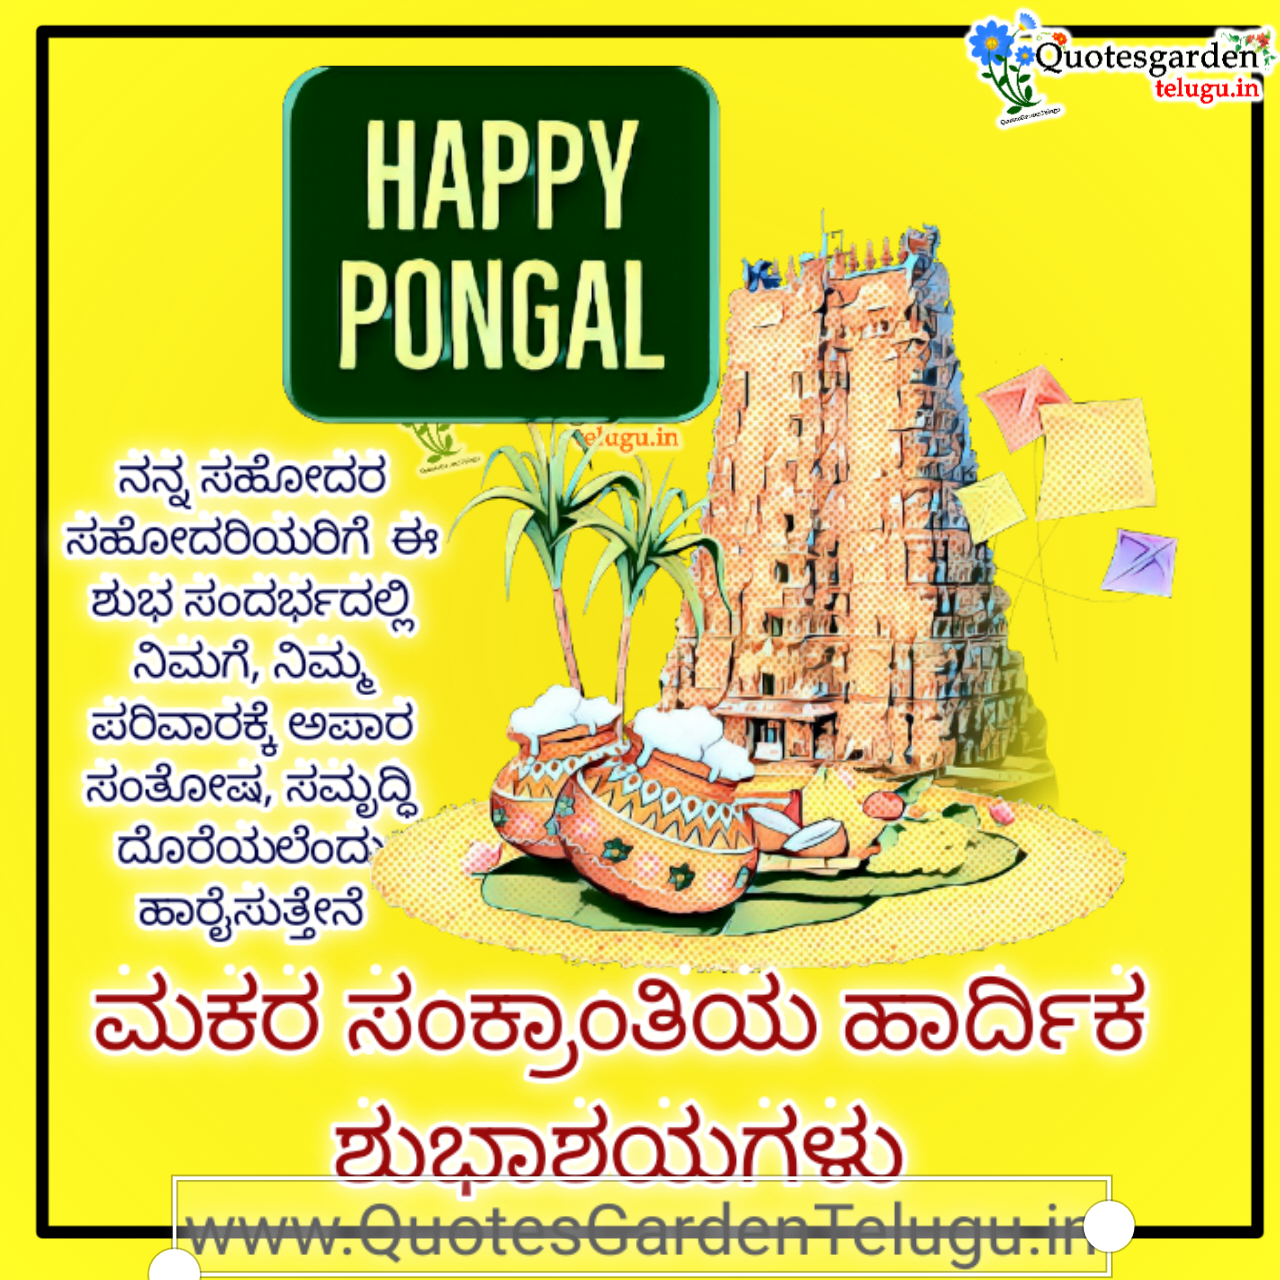 Happy Sankranti greetings in Kannada | QUOTES GARDEN TELUGU ...